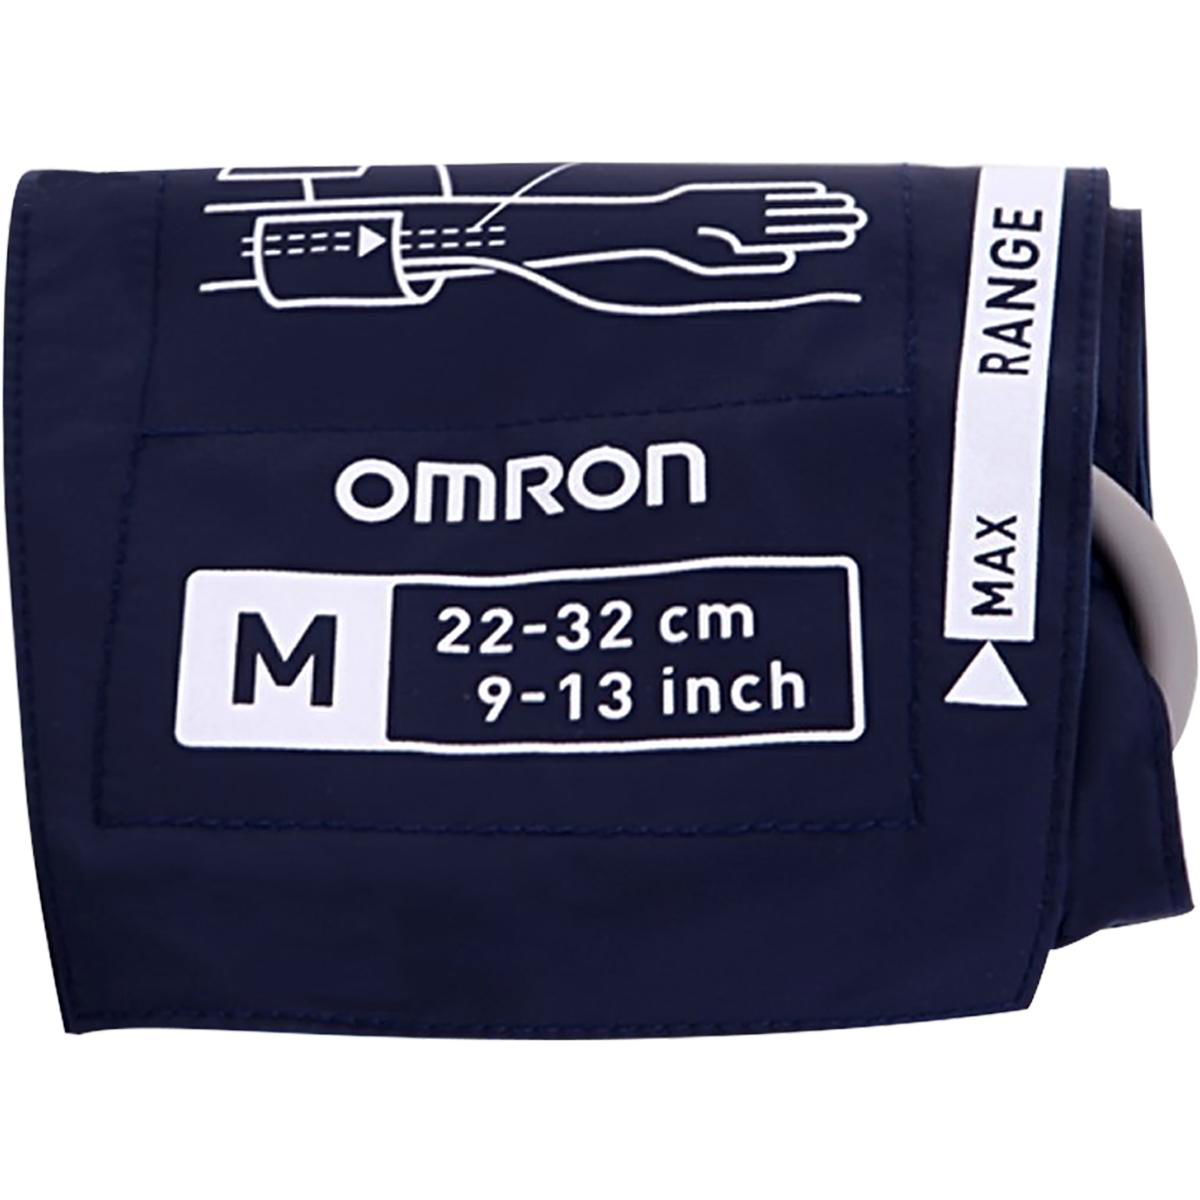 original OMRON HBP-1100/1300 Upper arm single cuffs blood pressure monitor large